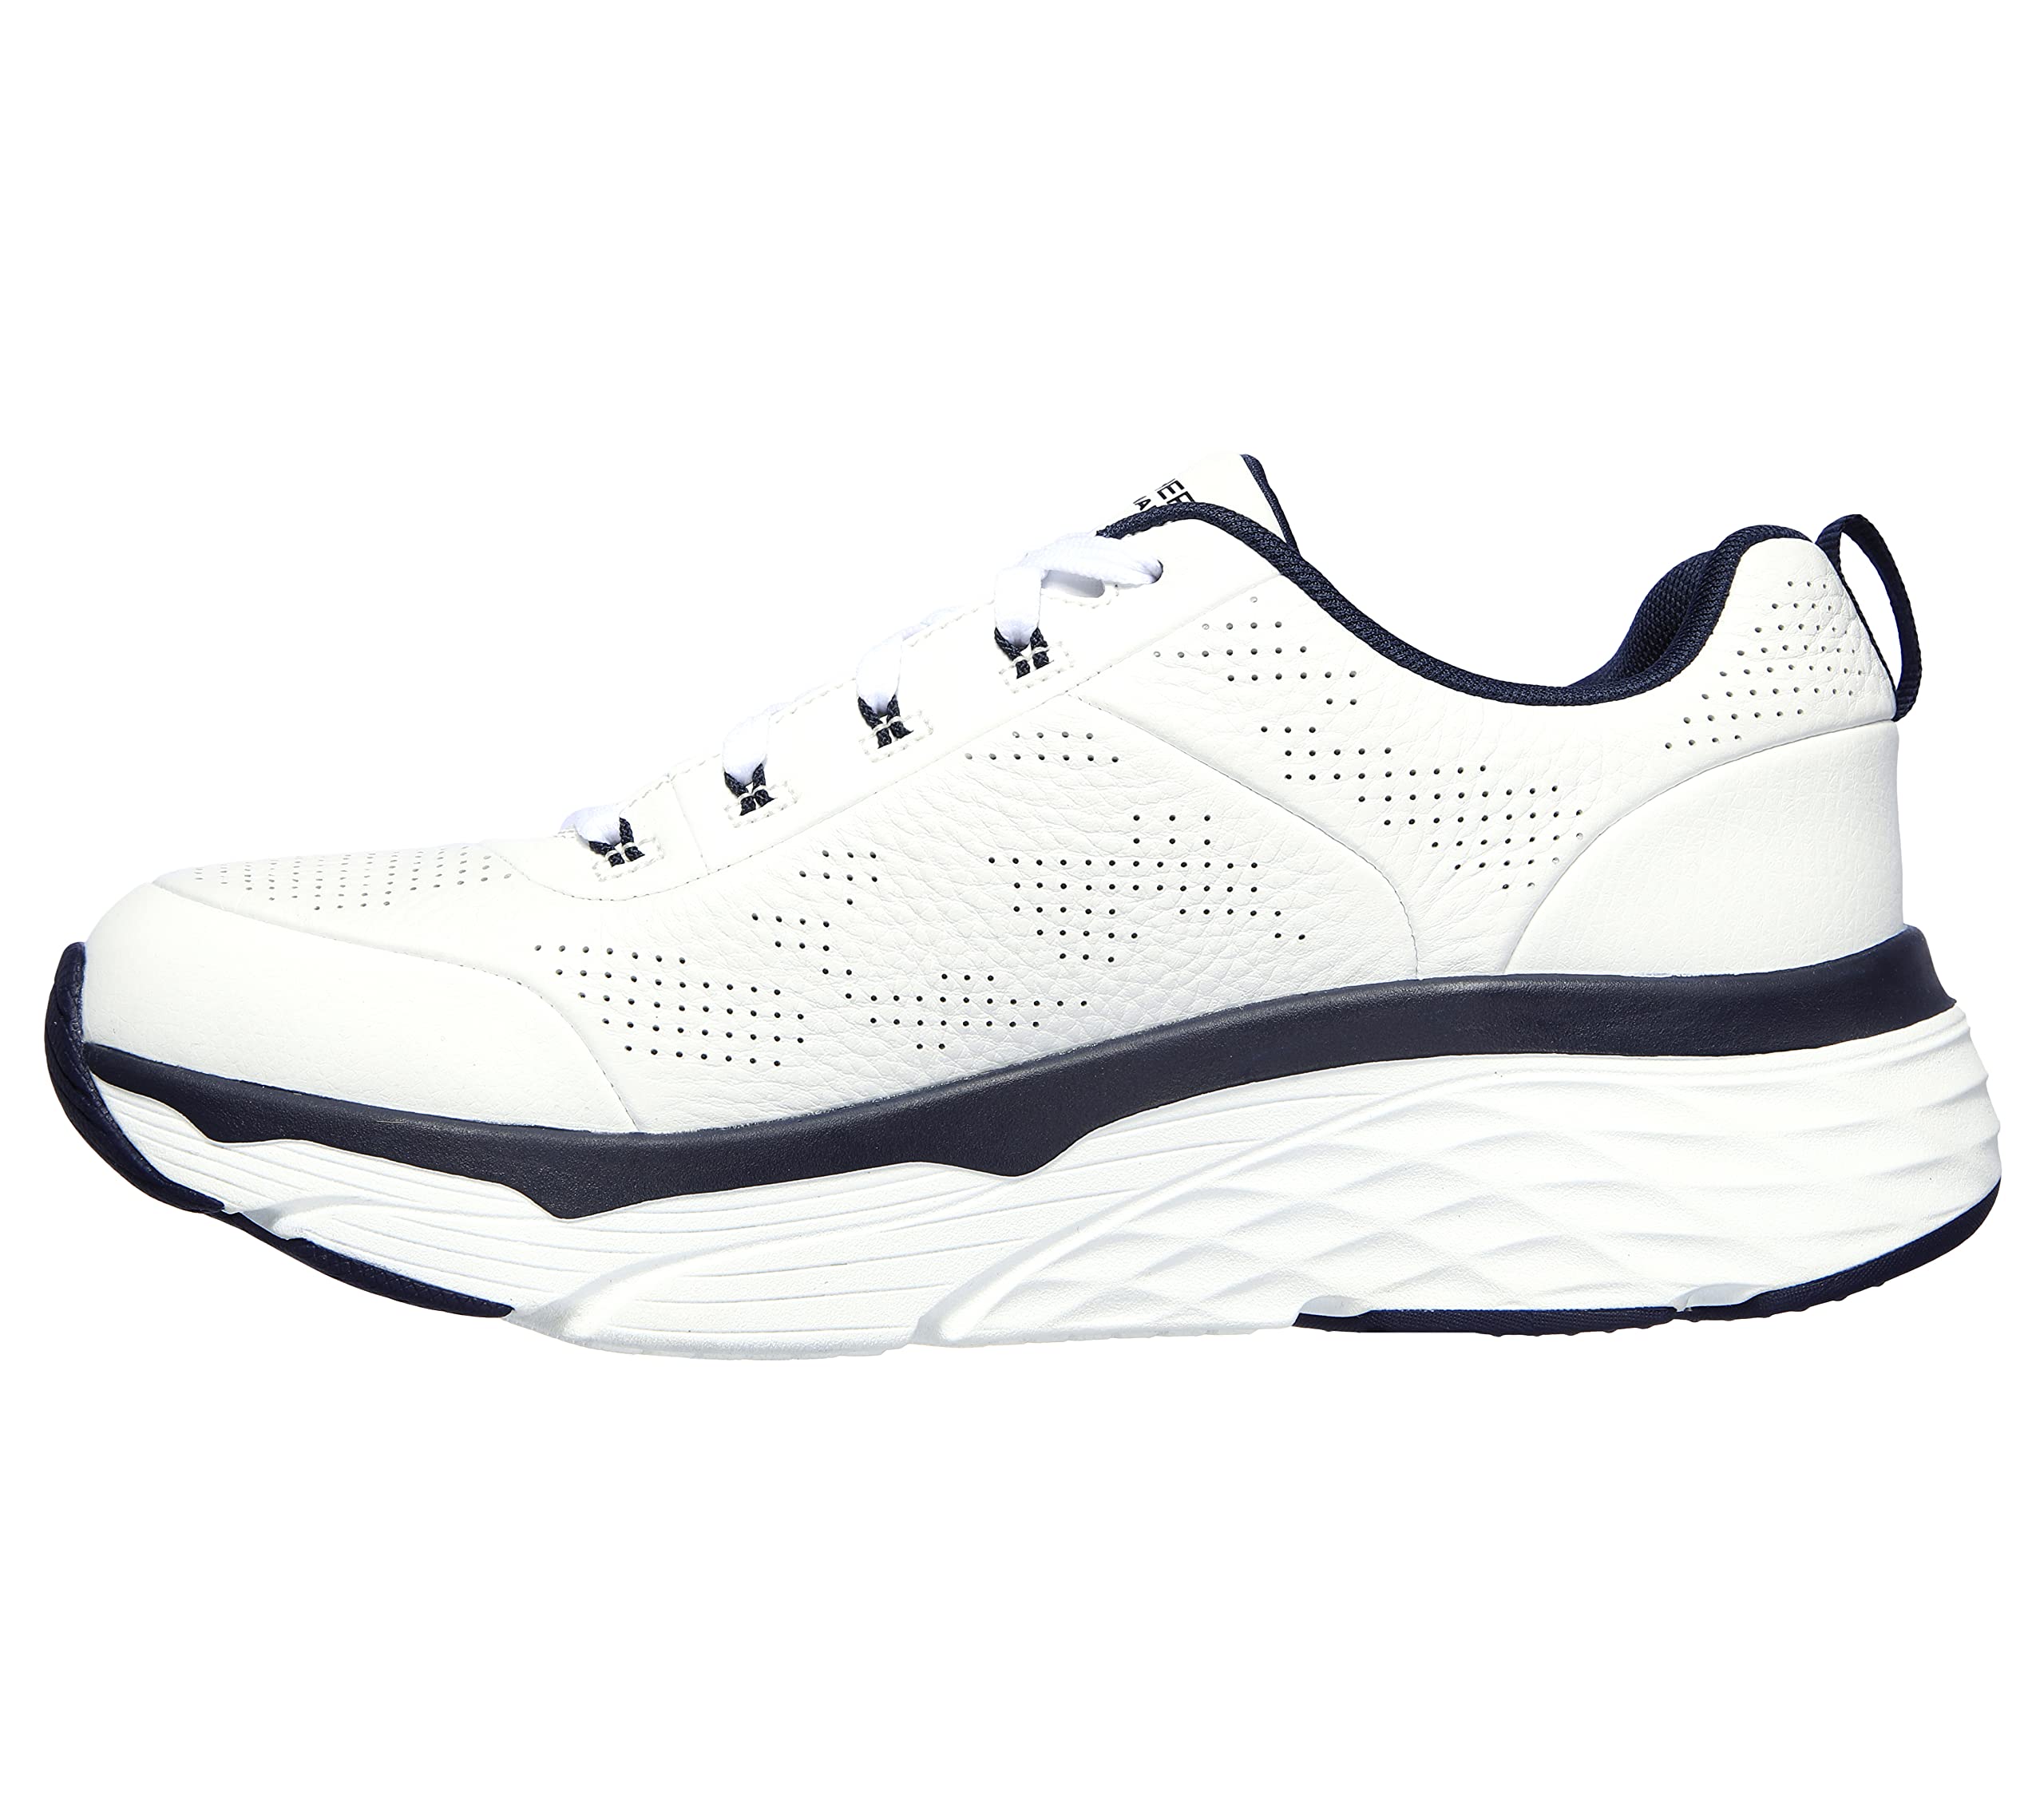 Skechers Men's Max Cushioning Elite Lucid-Athletic Leather Cross-Training Tennis Shoe Sneaker, White/Navy, 12 X-Wide